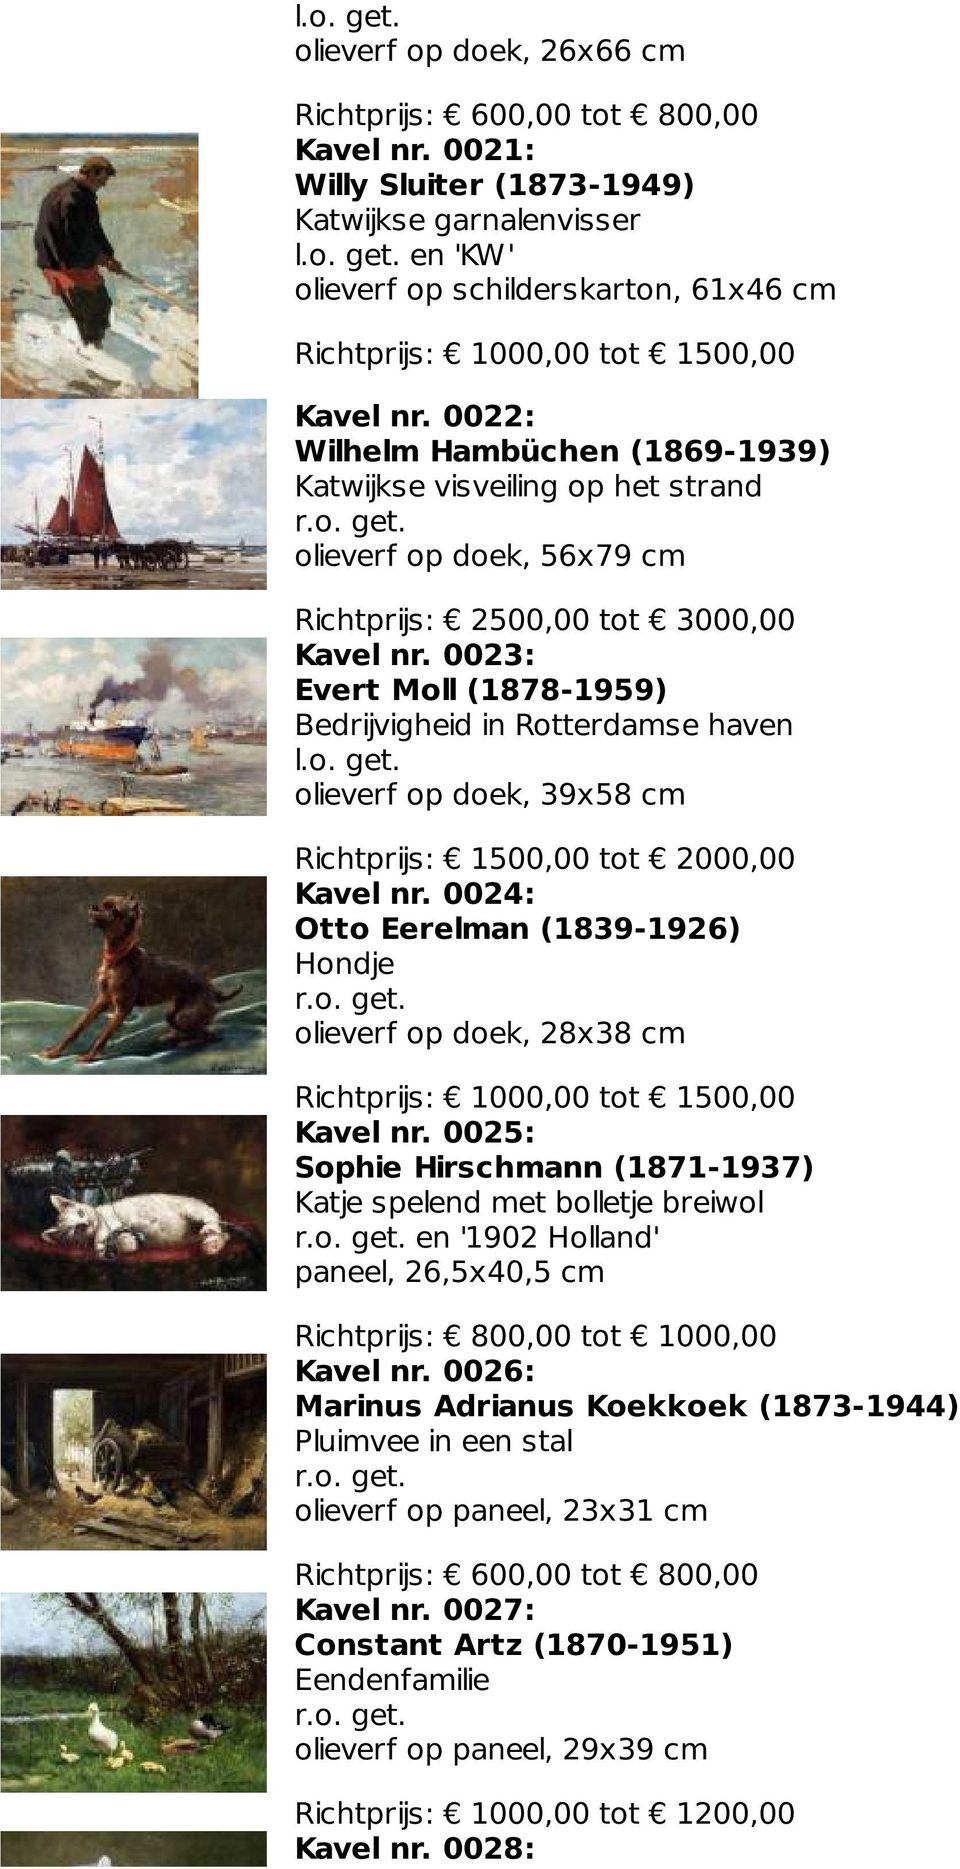 0023: Evert Moll (1878-1959) Bedrijvigheid in Rotterdamse haven olieverf op doek, 39x58 cm Kavel nr. 0024: Otto Eerelman (1839-1926) Hondje olieverf op doek, 28x38 cm Kavel nr.